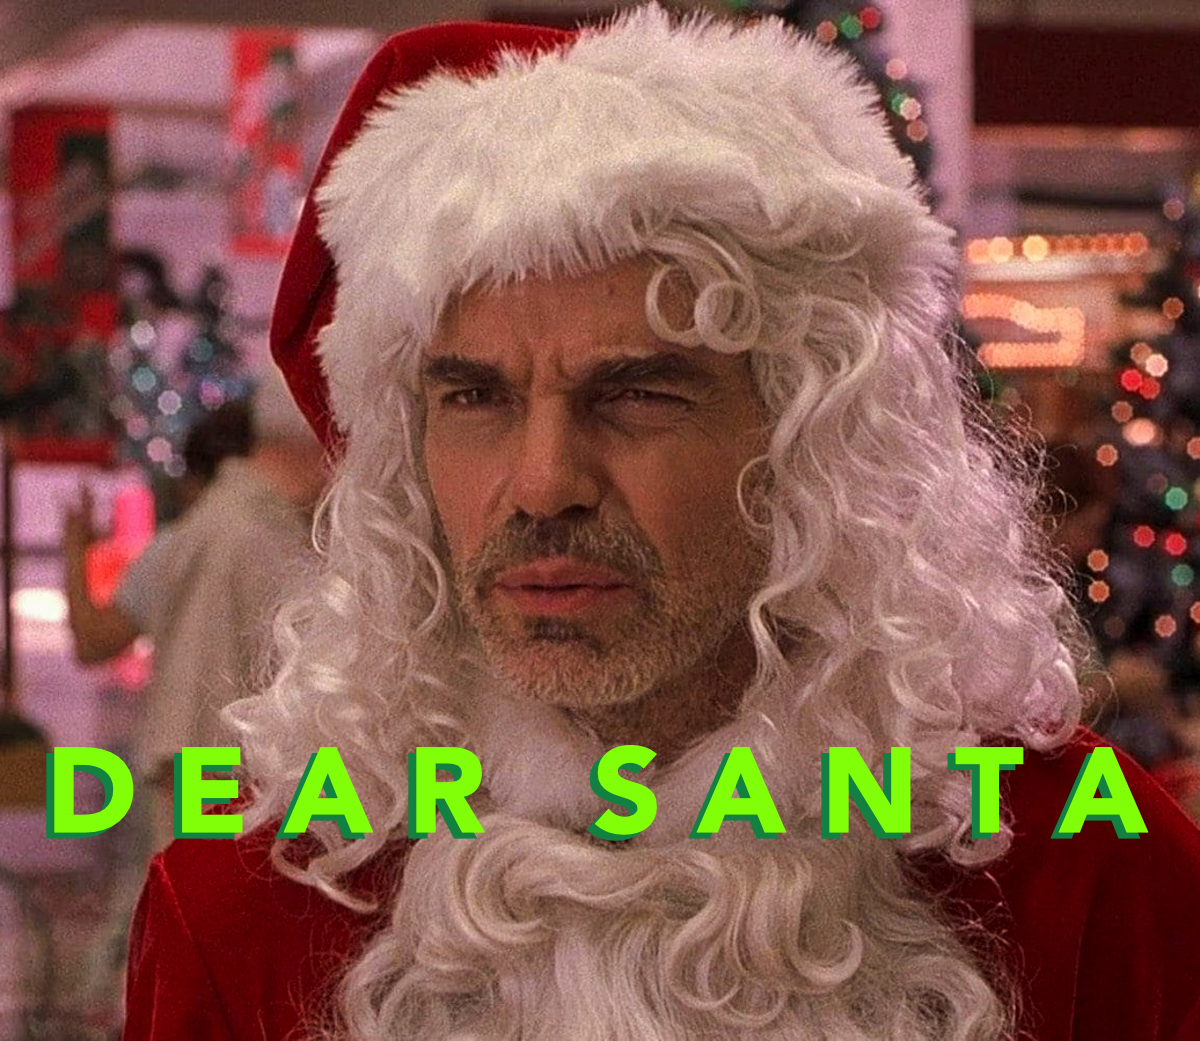 My ‘Dear Santa’ List